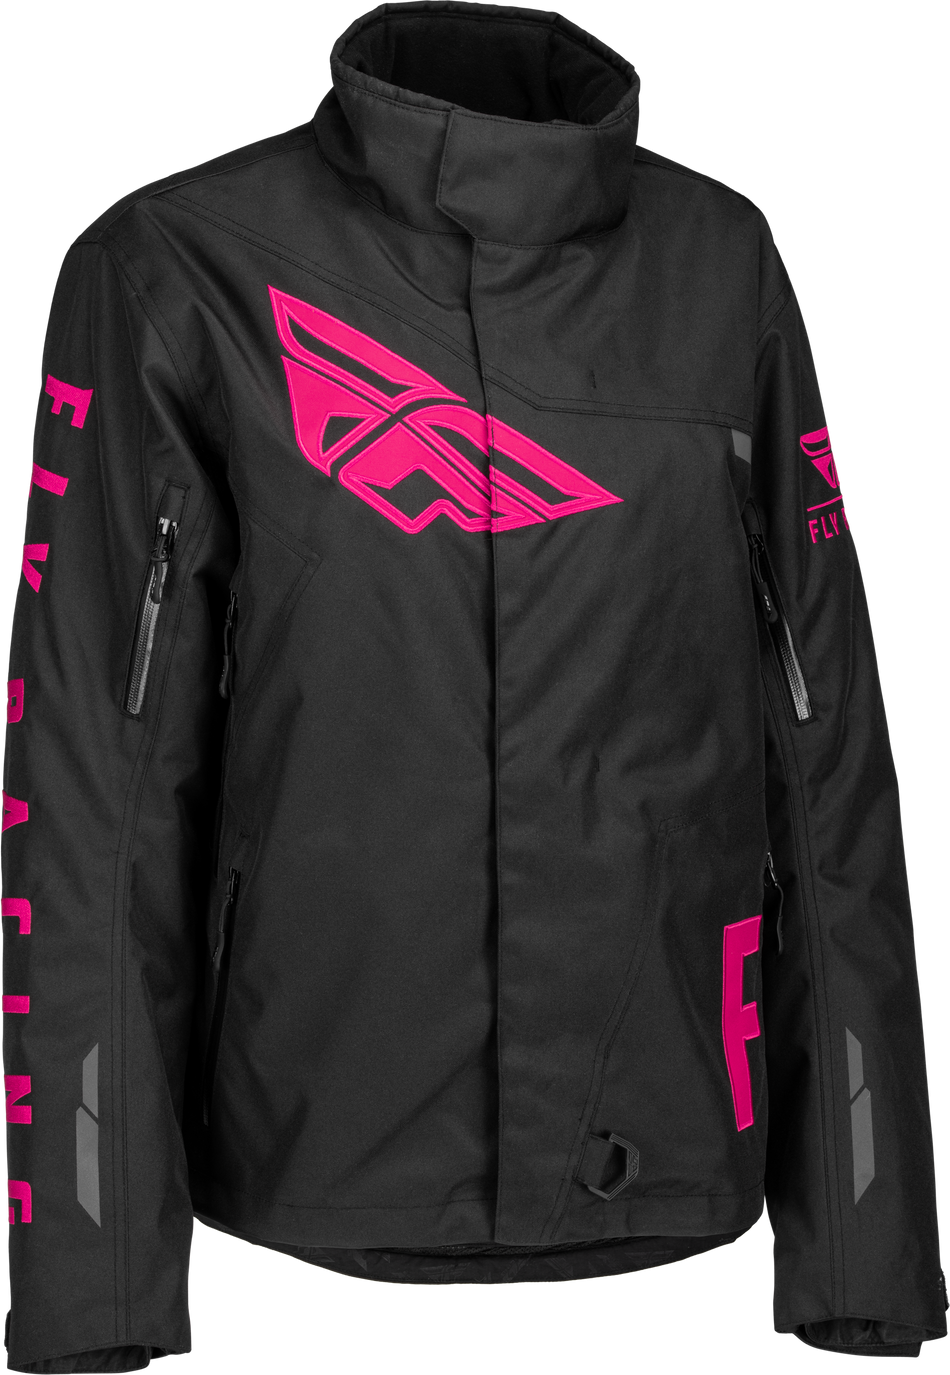 FLY RACING Women's Snx Pro Jacket Black/Pink Lg 470-4512L